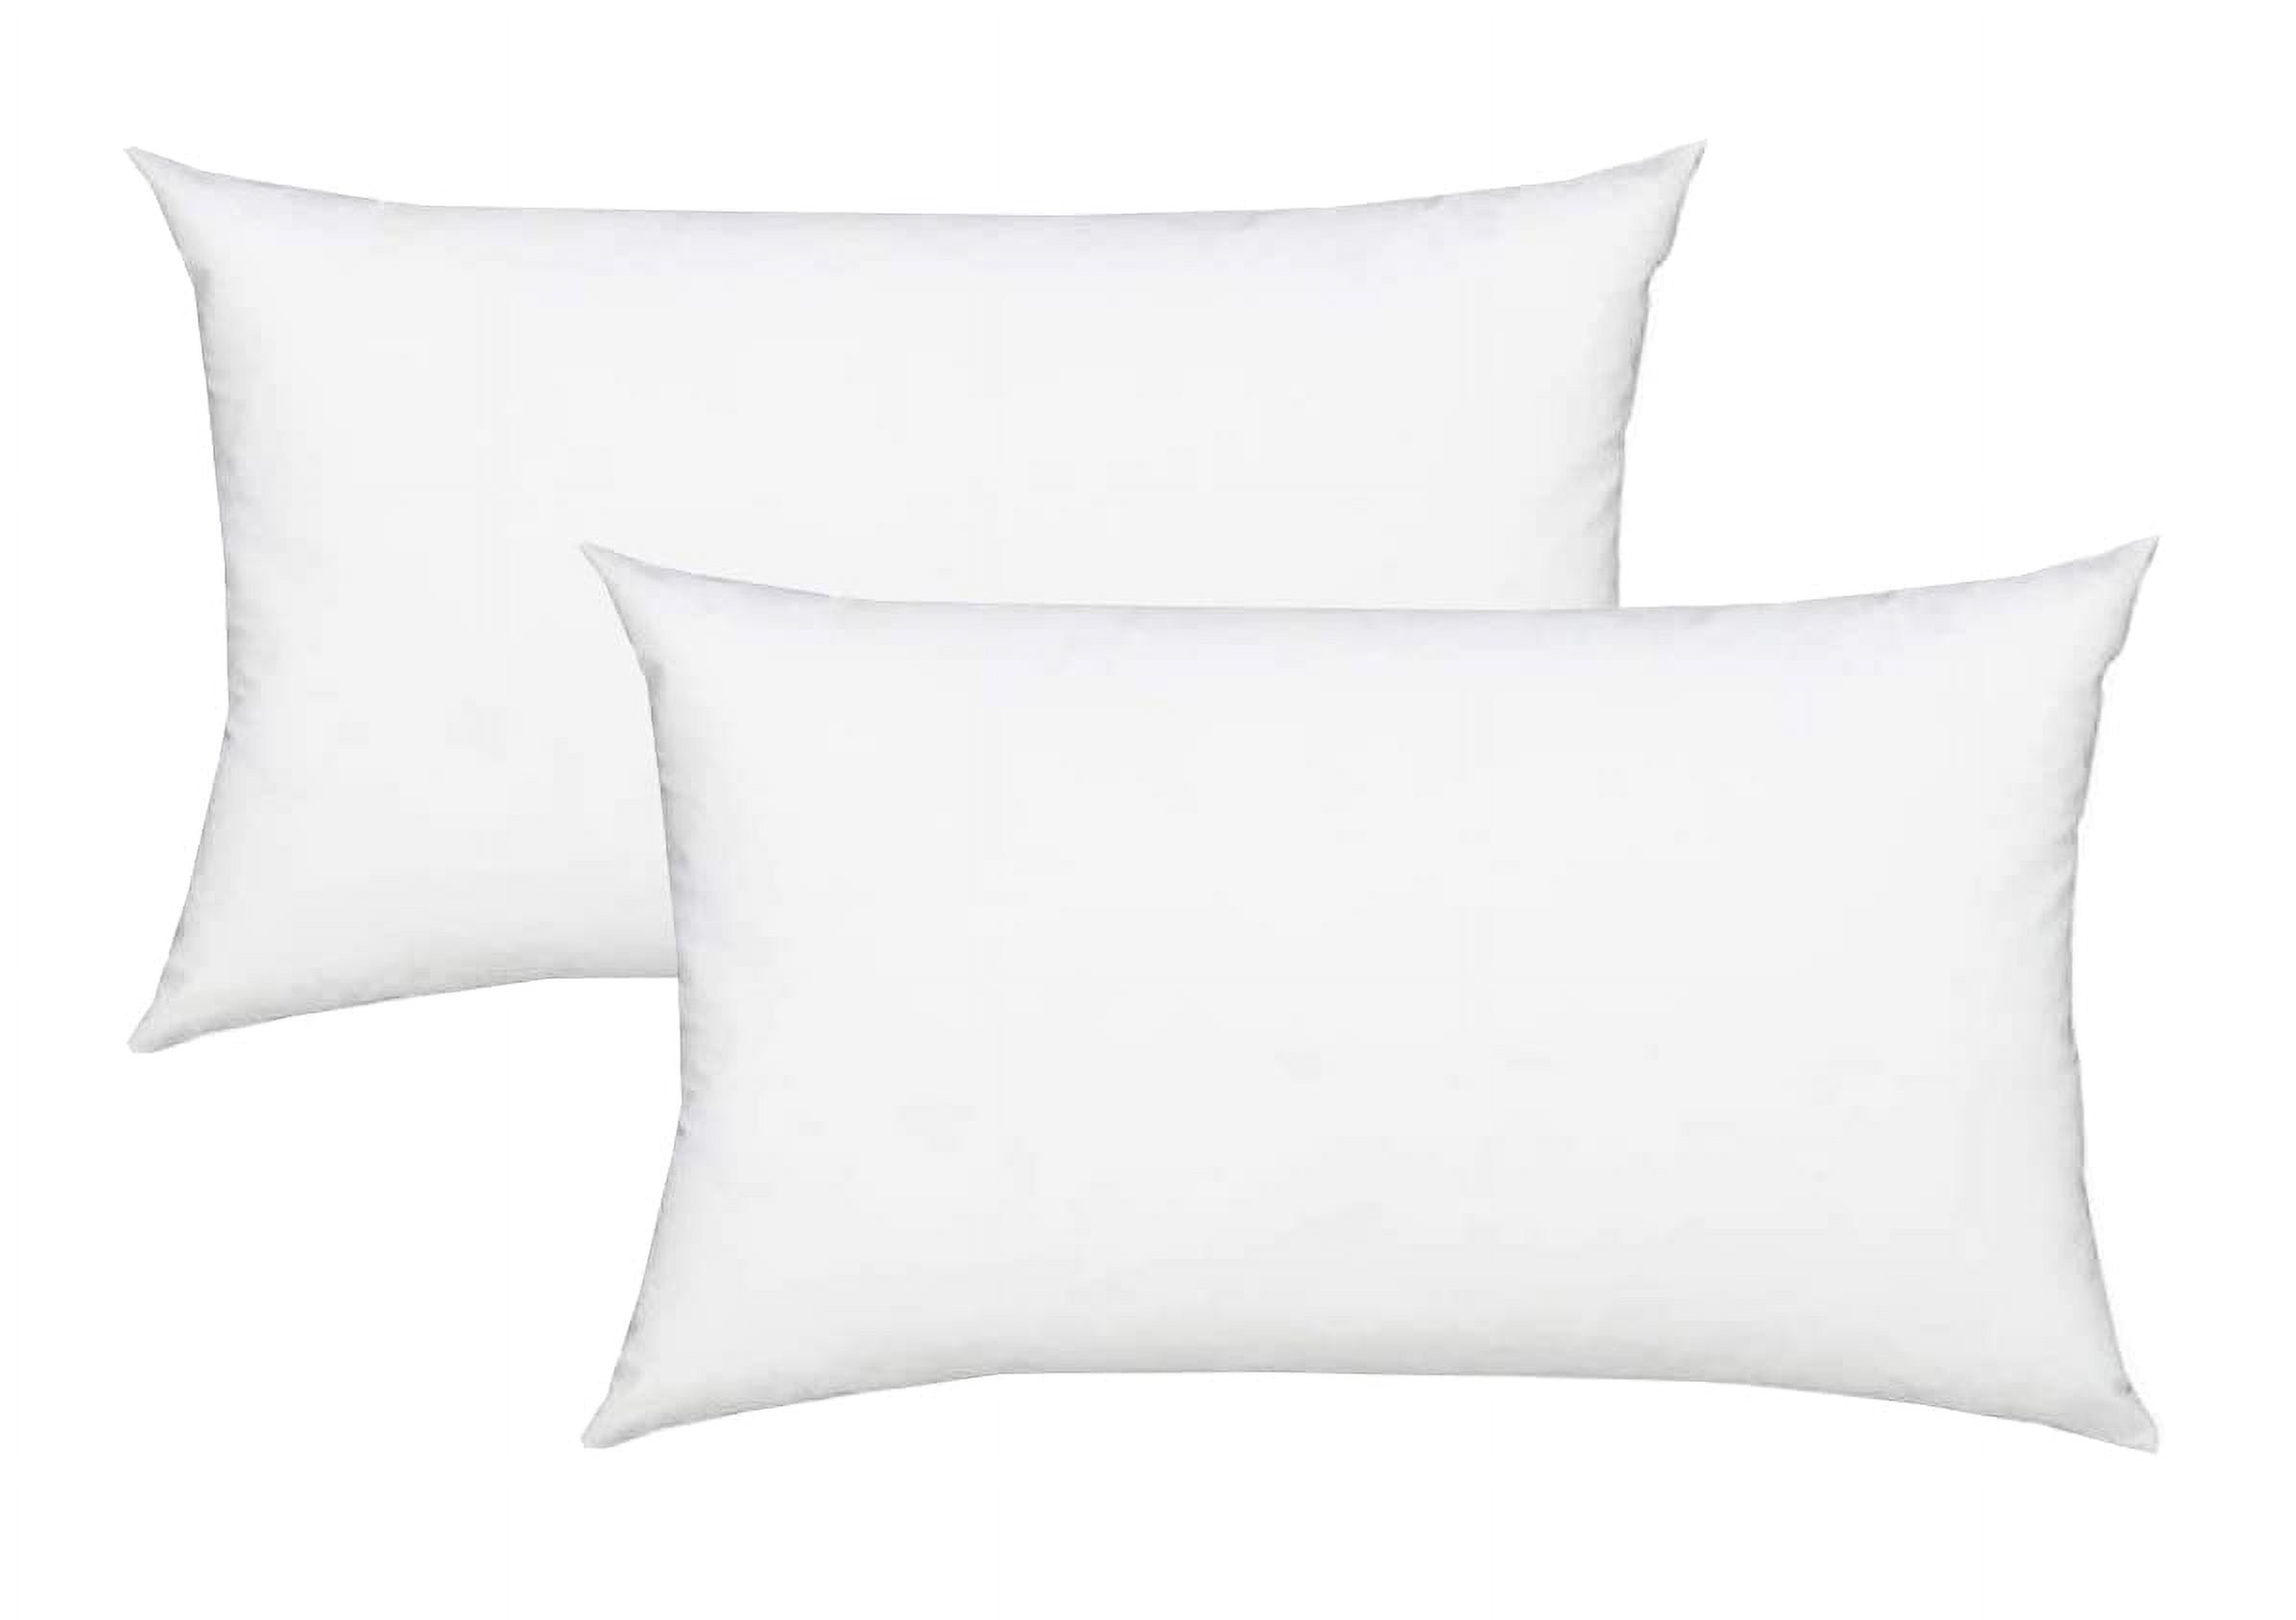 Fennco Styles Polyester Fiber White Pillow Insert - Made in USA 20x20